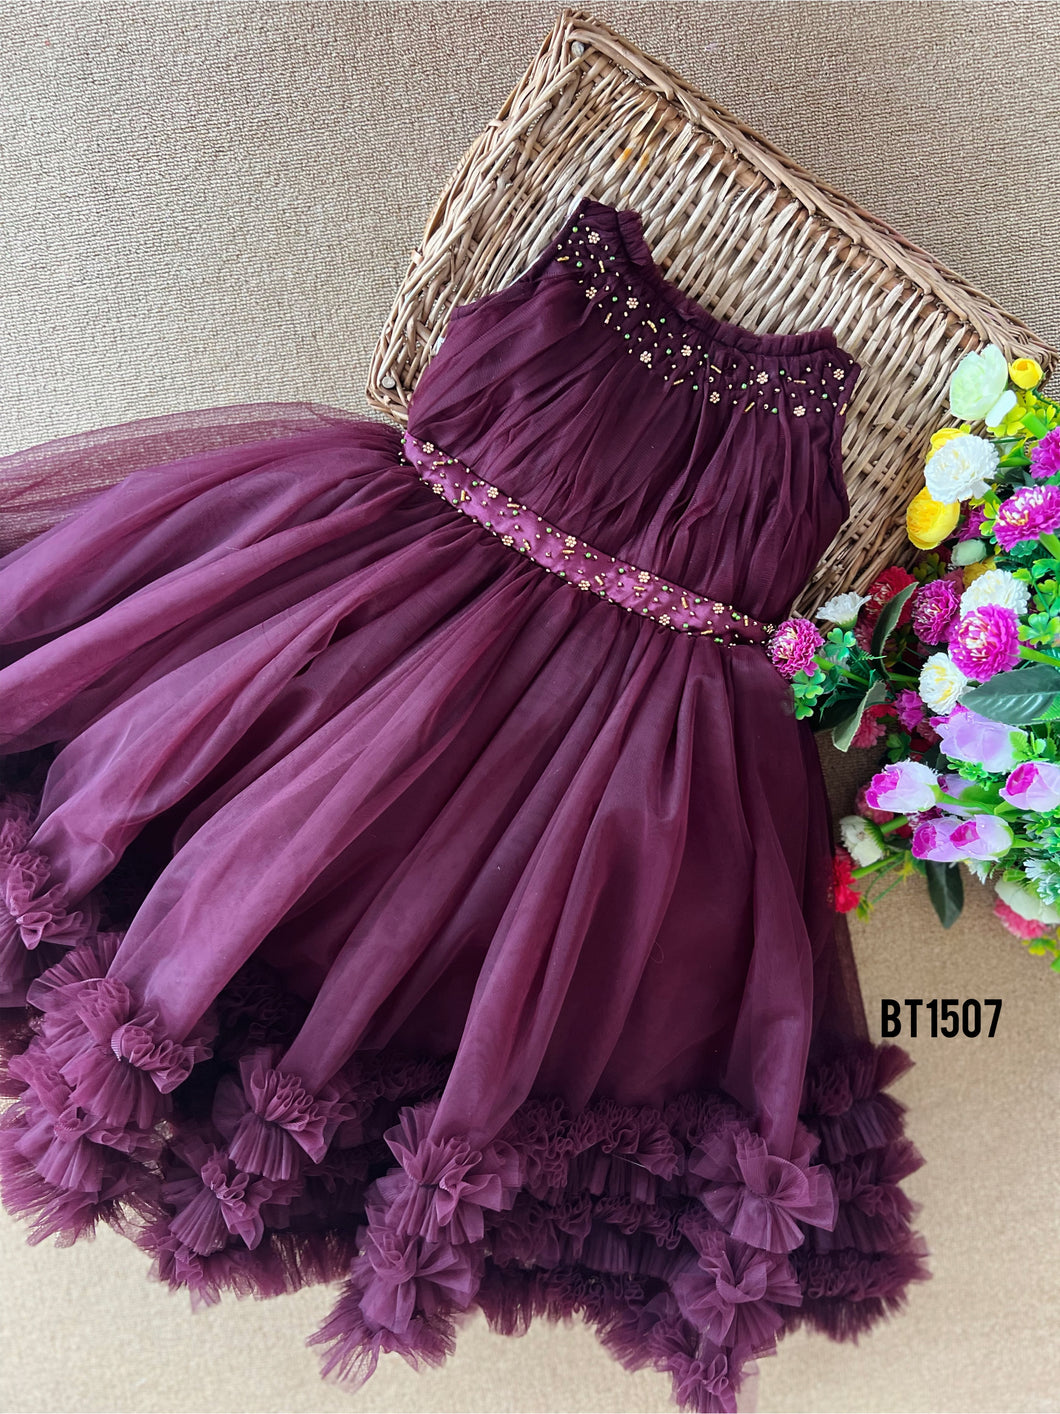 BT1507 Regal Plum Blossom Dress - Elegance for Your Little Star